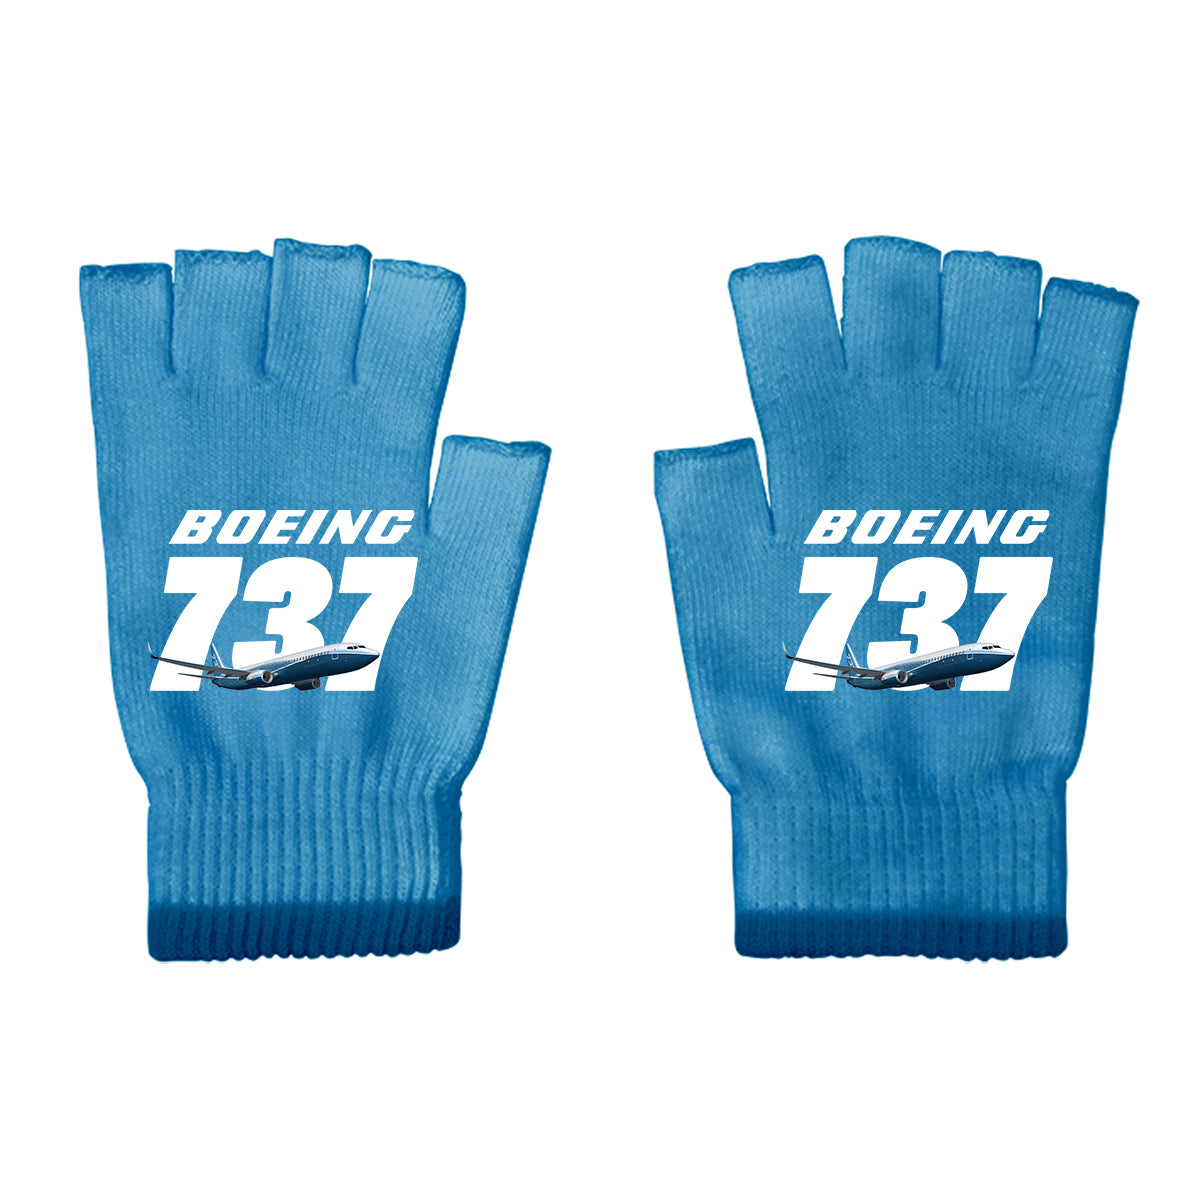 Super Boeing 737+Text Designed Cut Gloves